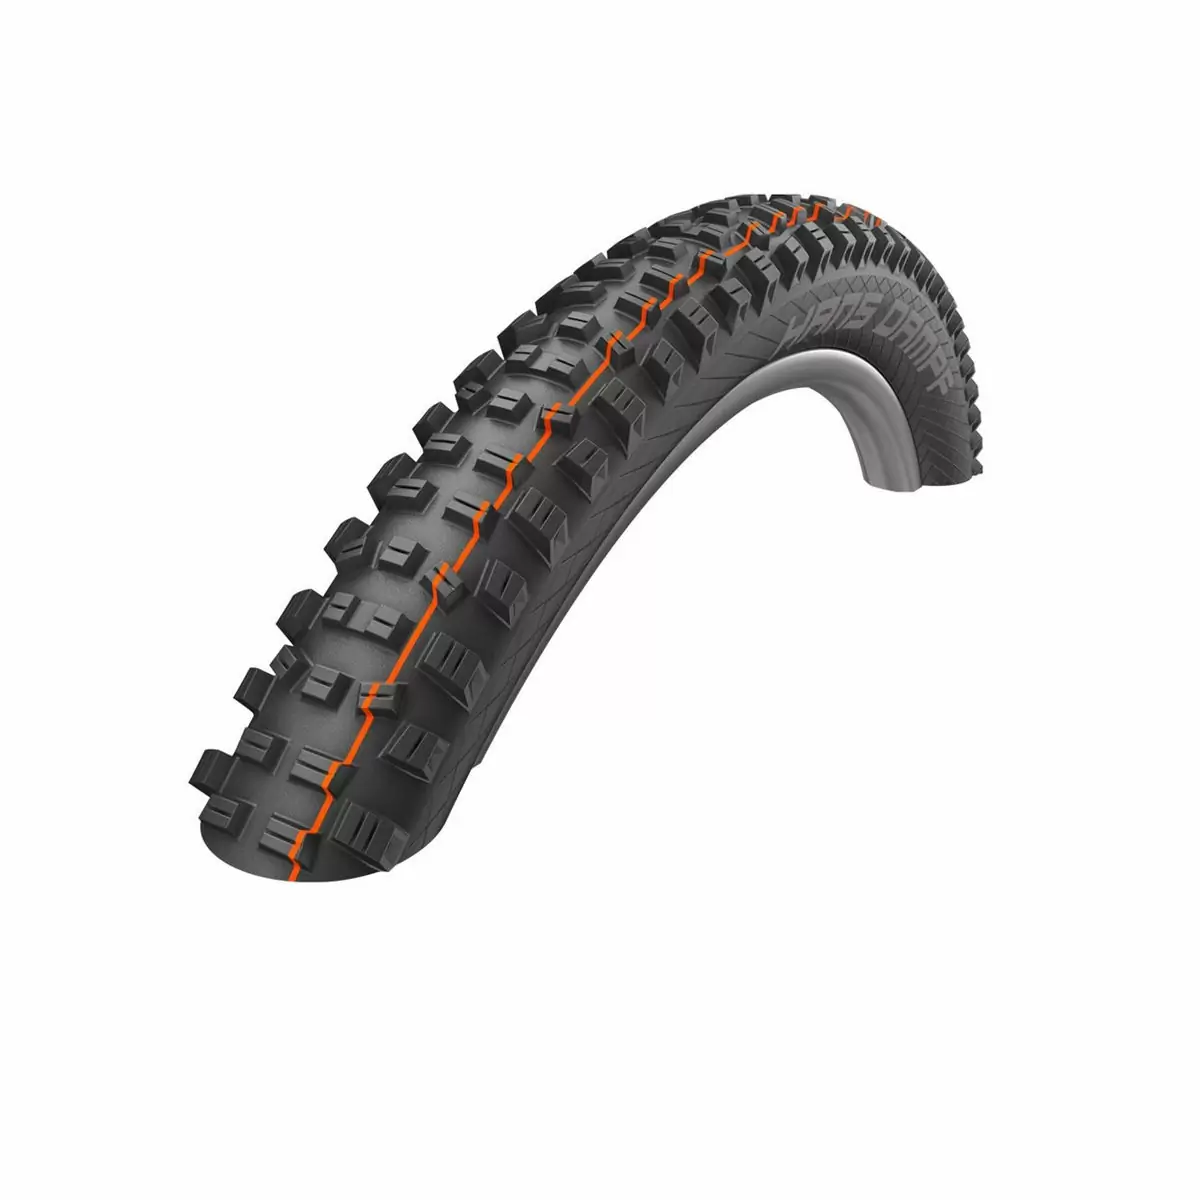 Tire Hans Dampf 27.5x2.35 EVO SnakeSkin Super Gravity Addix Soft Tubeless Ready Black - image